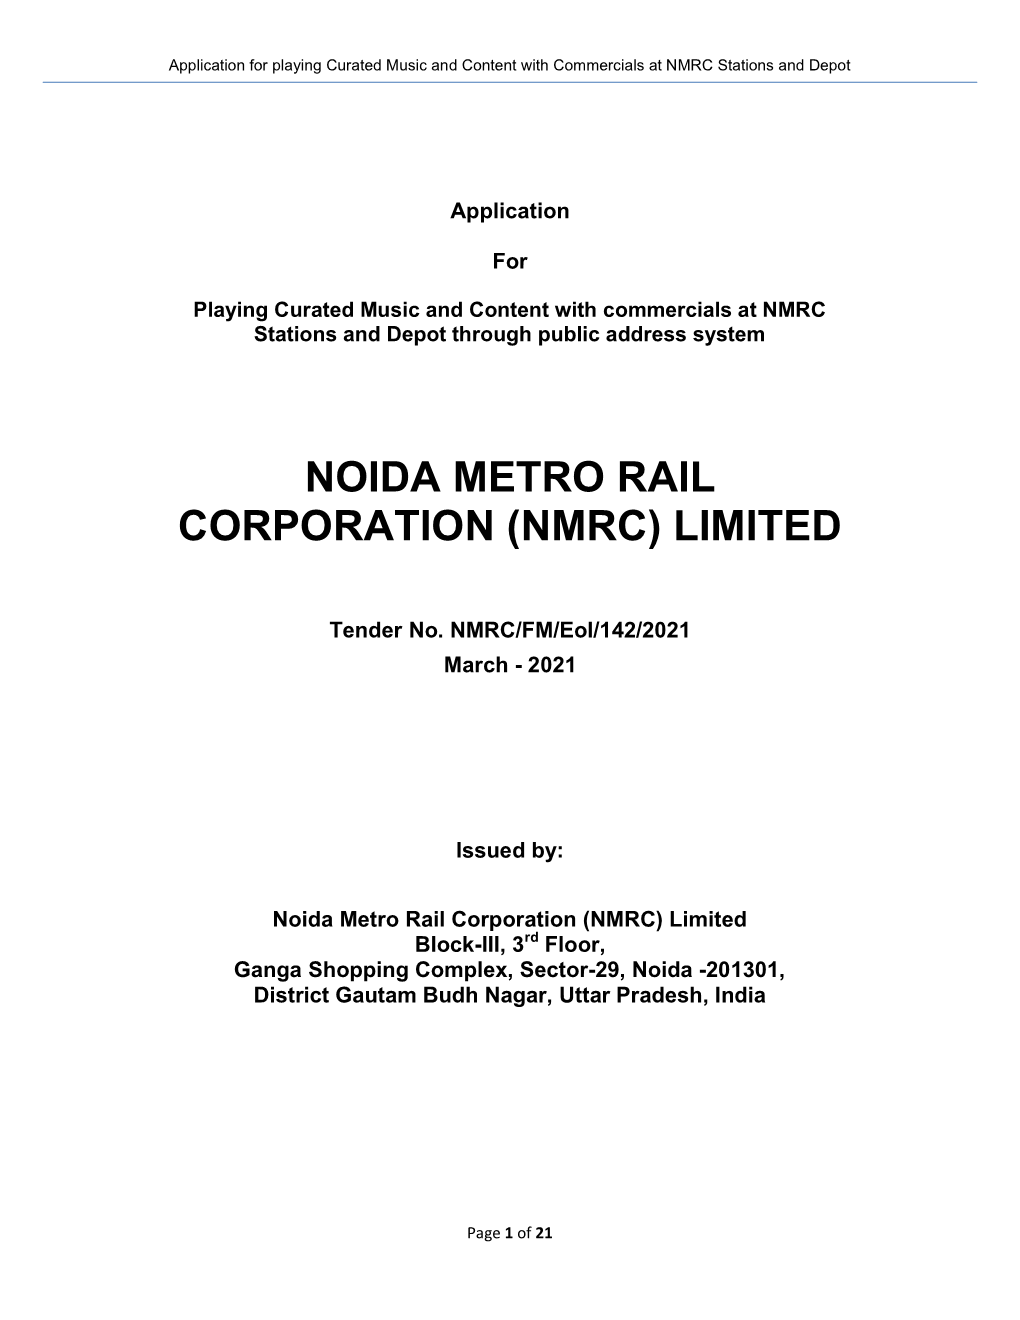 Noida Metro Rail Corporation (Nmrc) Limited